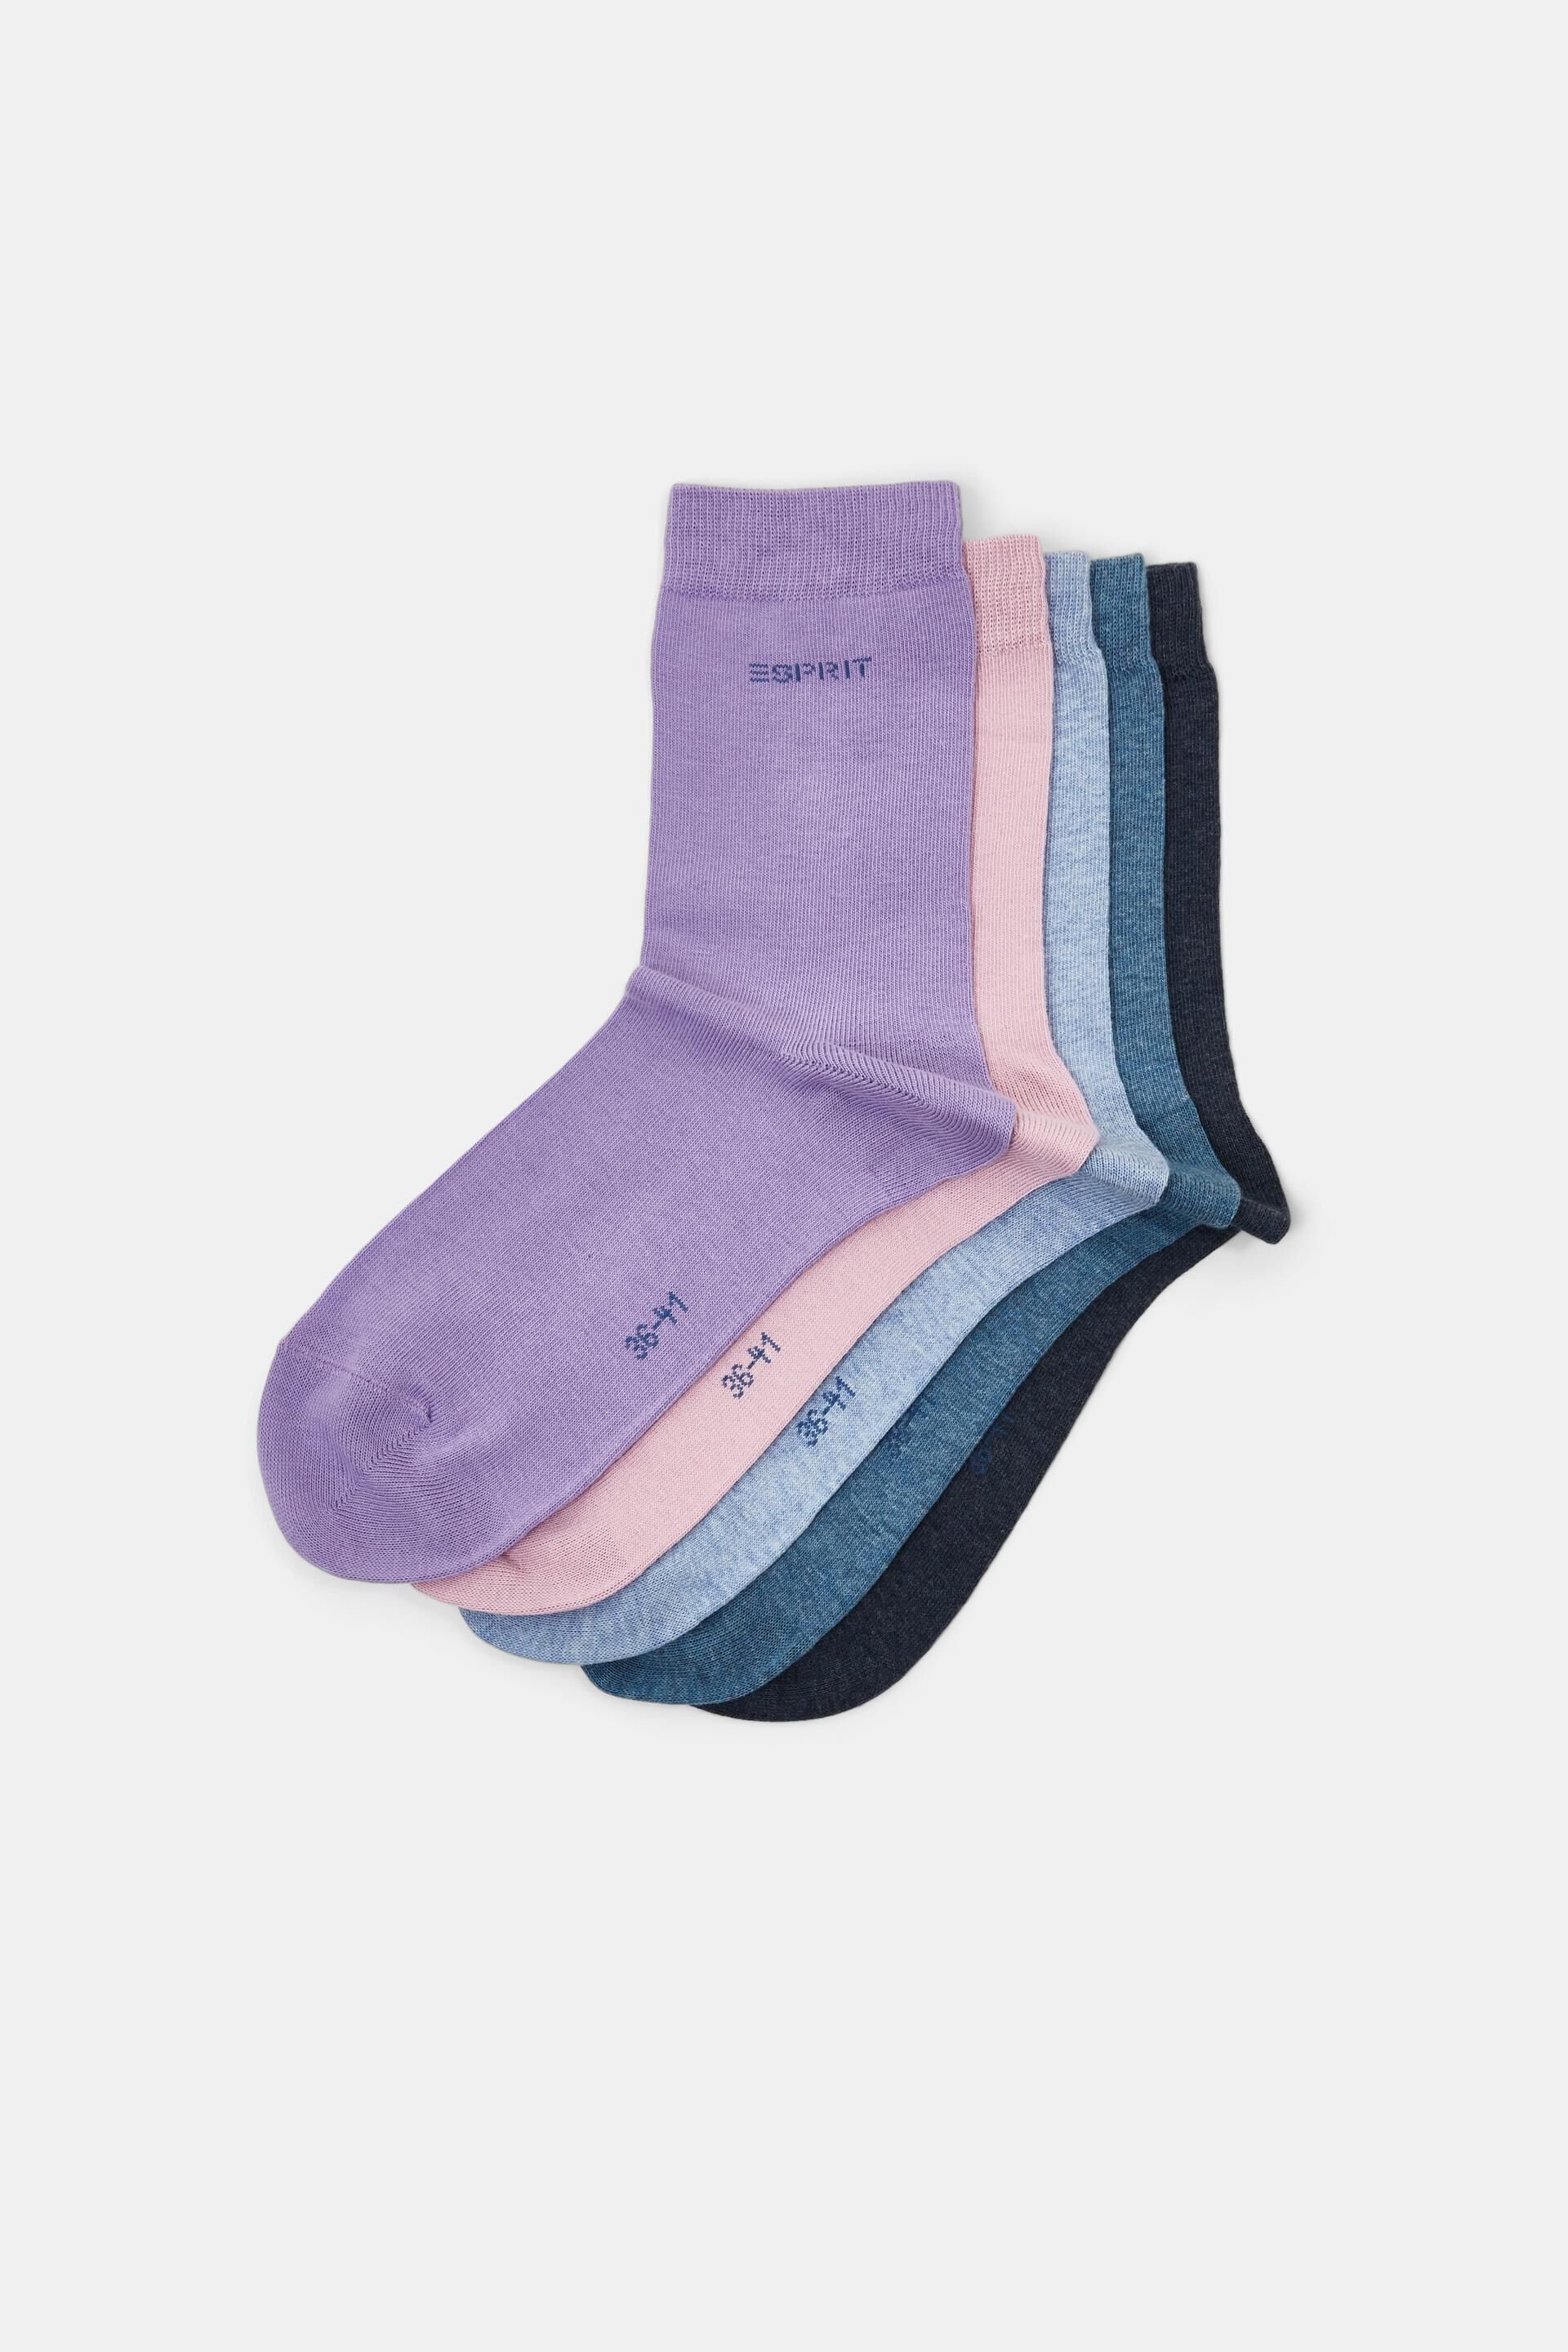 Esprit Online Store 5-pack of socks, organic cotton